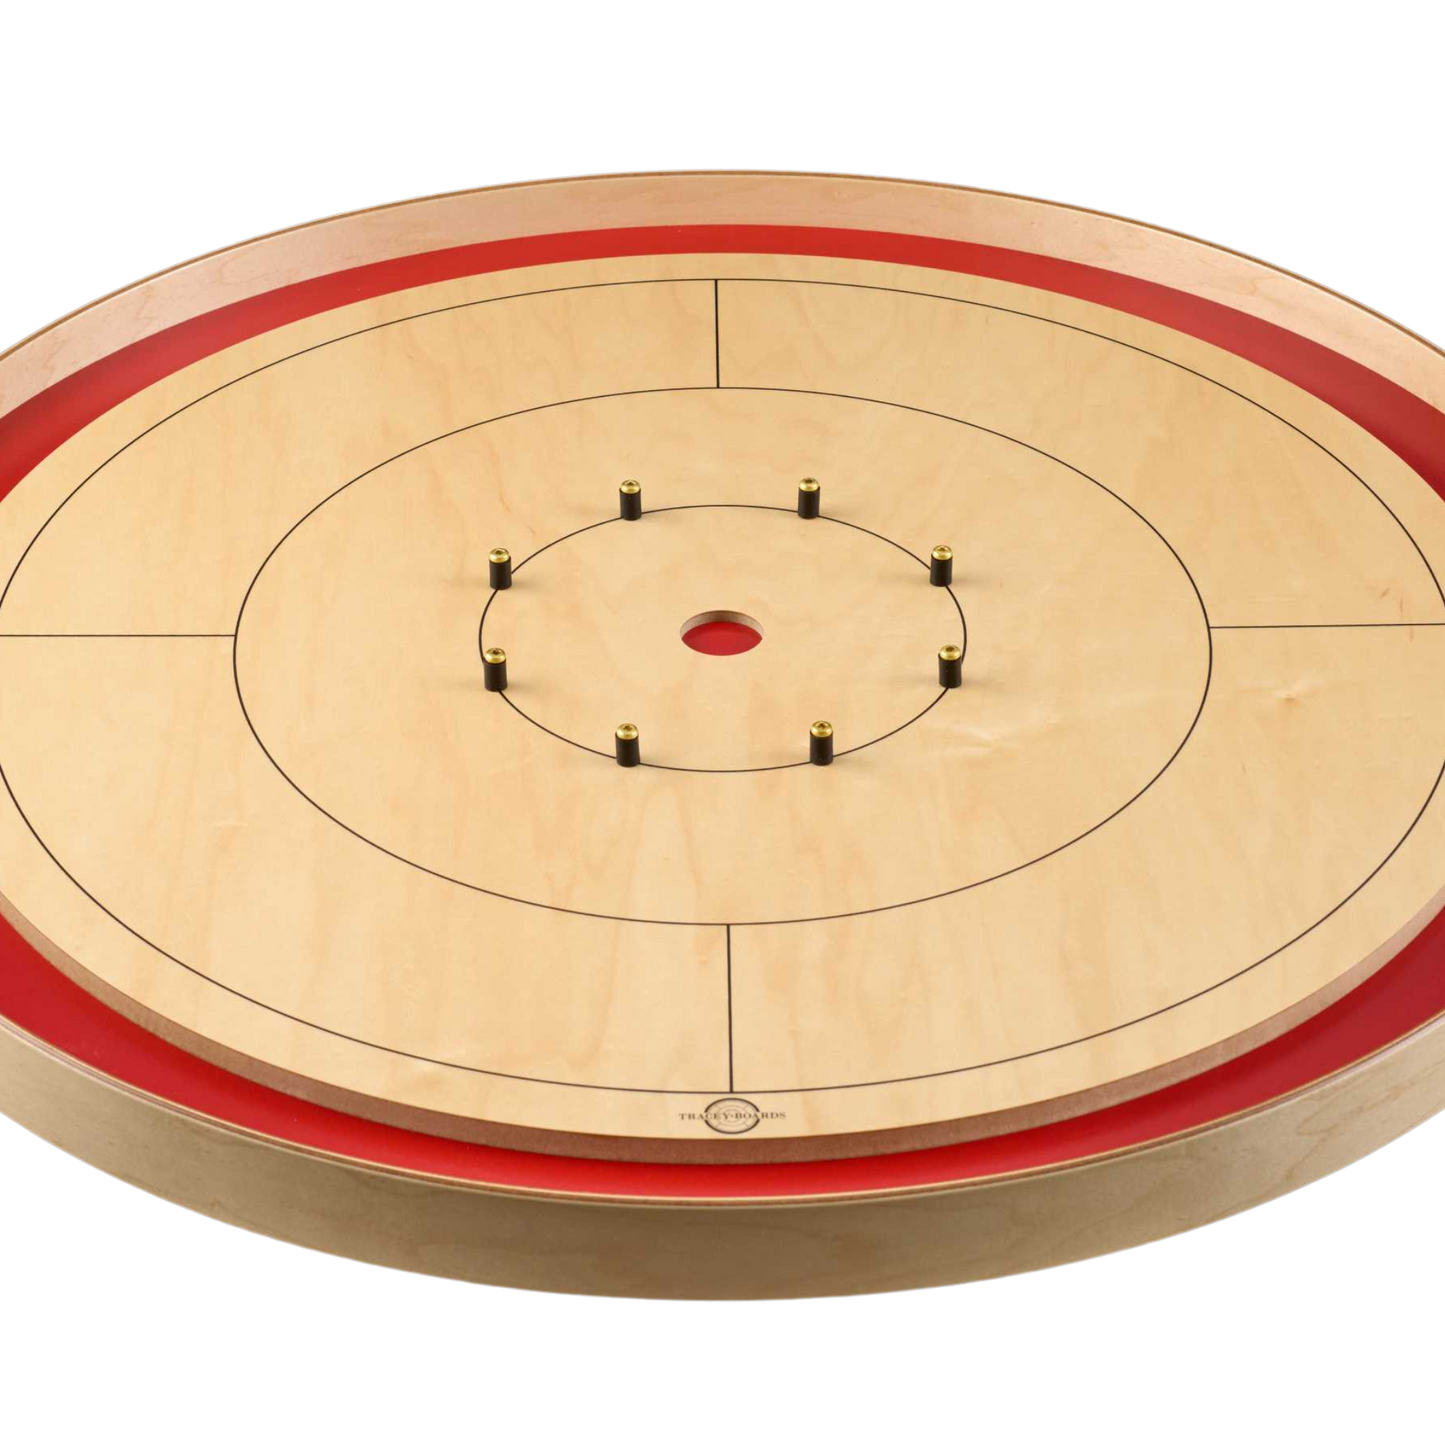 Tracey Red Tournament Crokinole Board Bundle